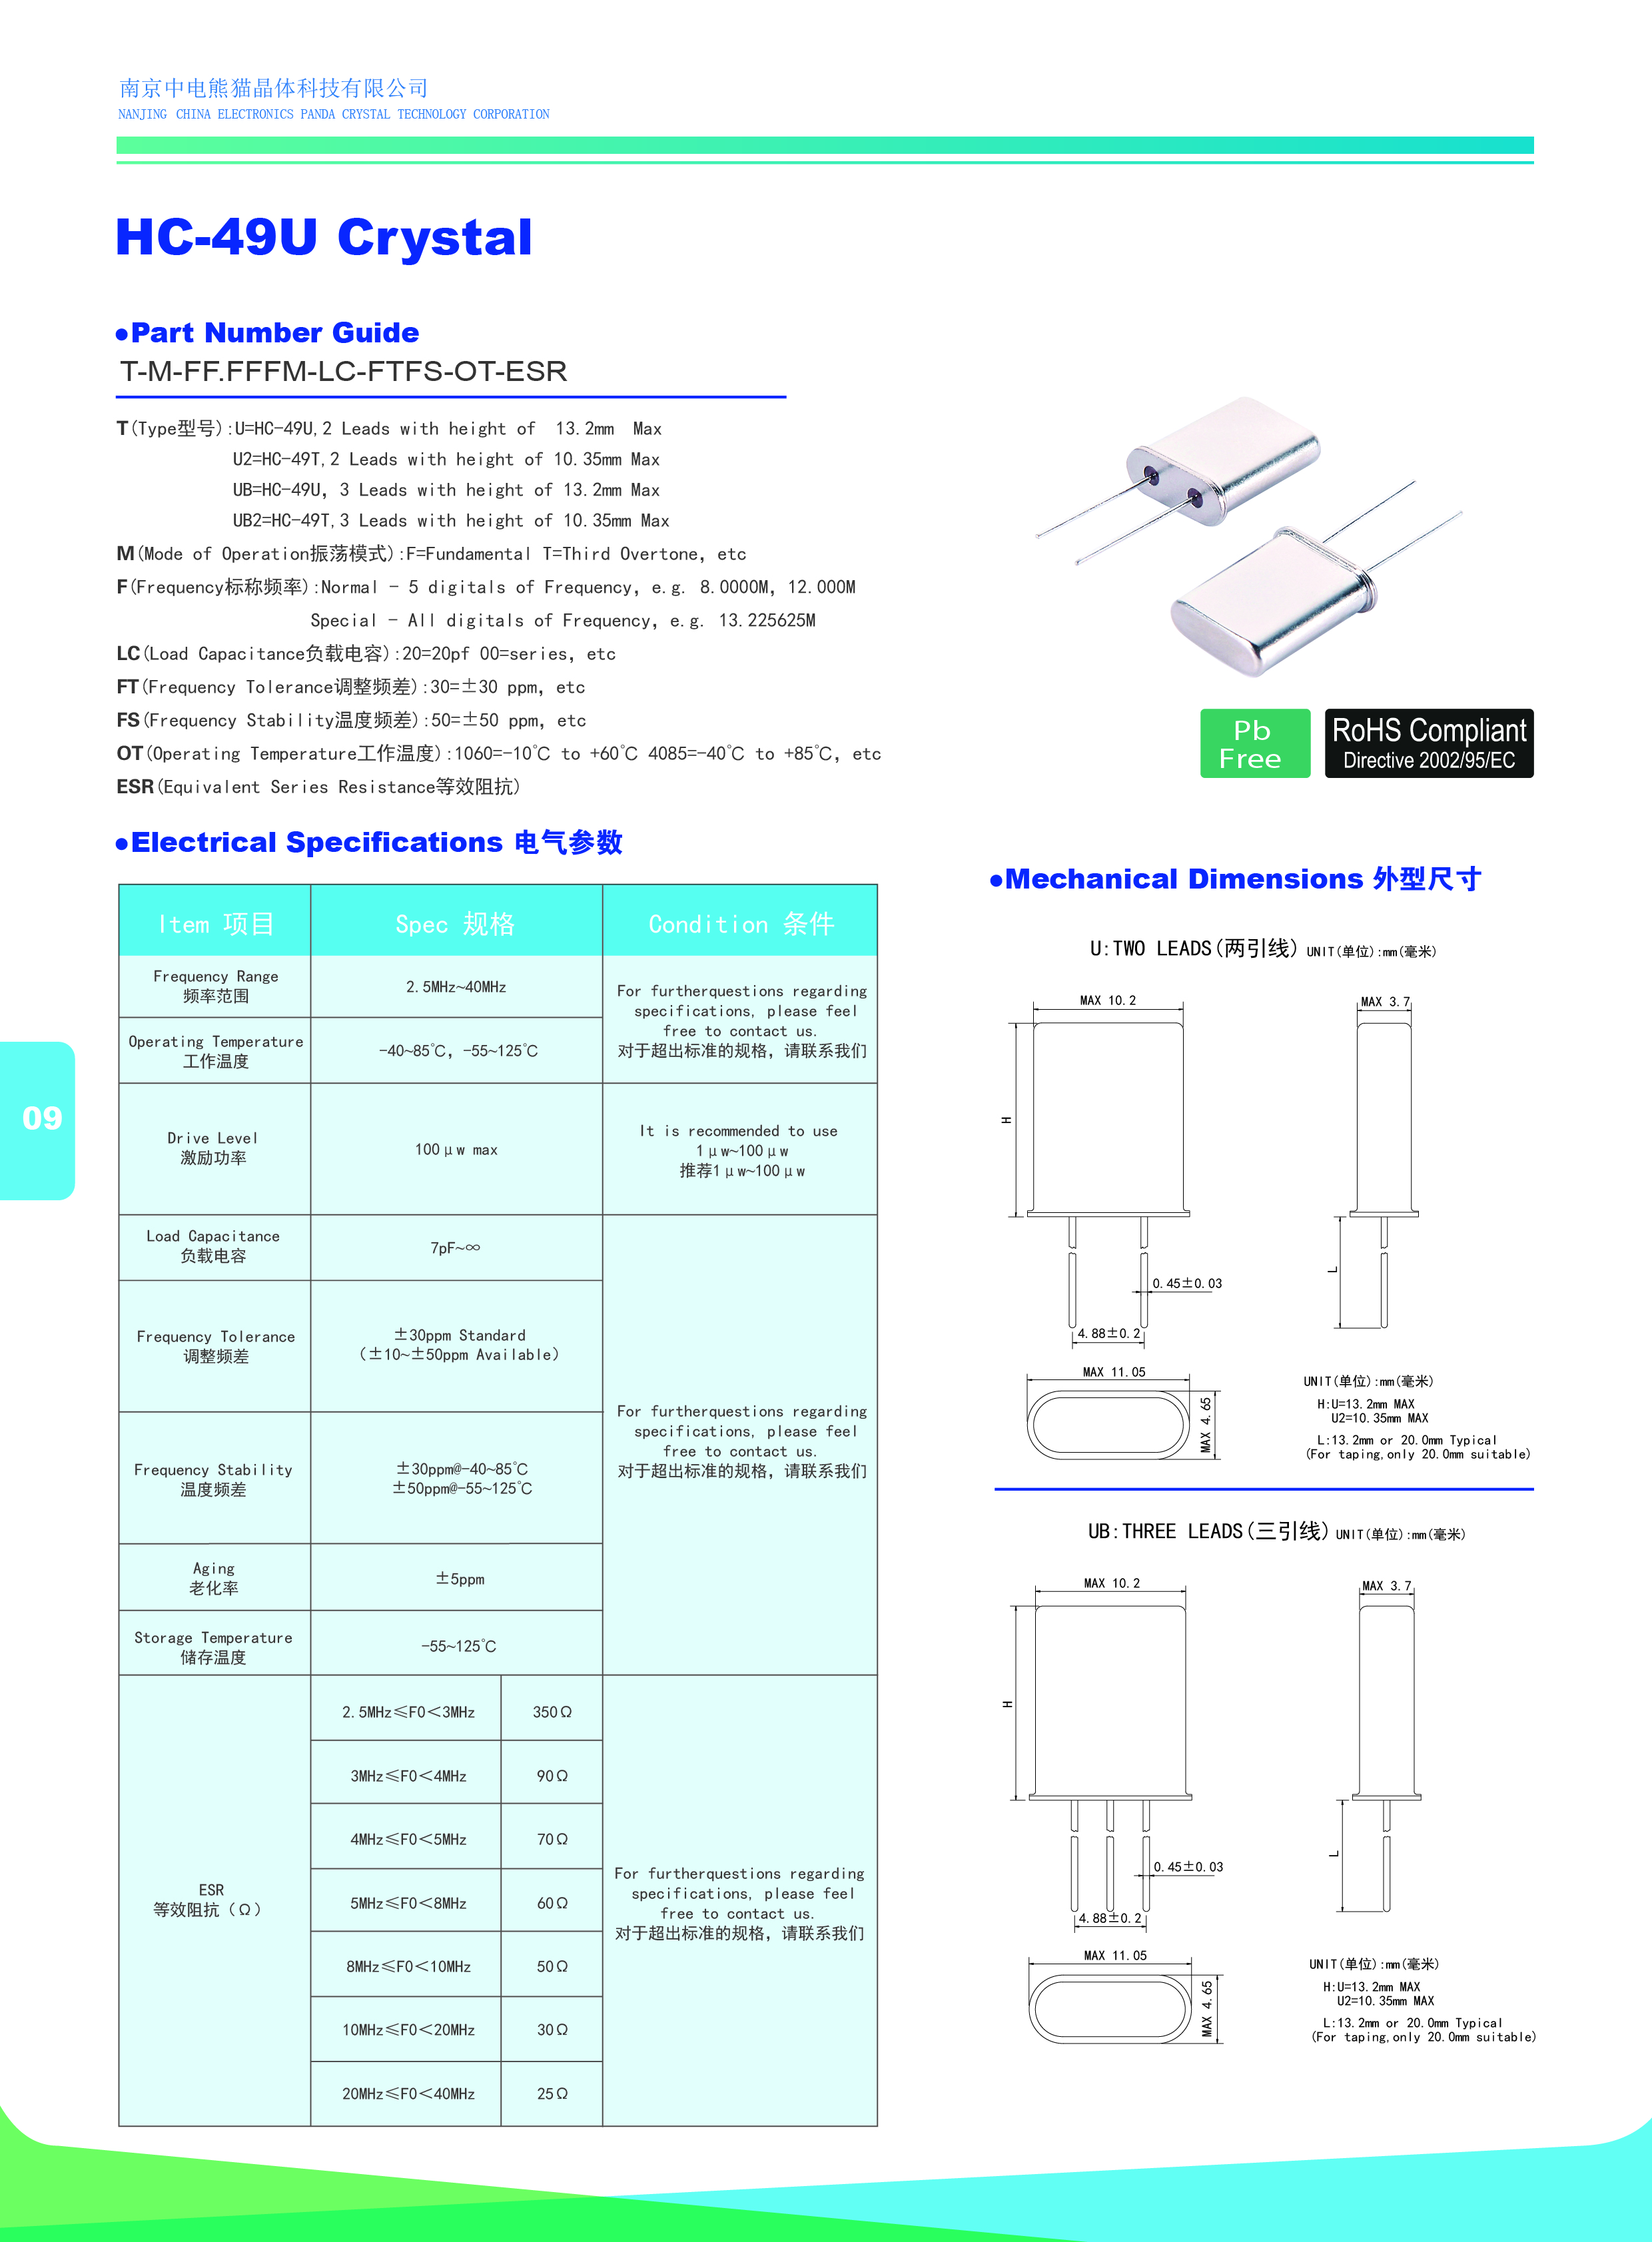 HC-49U Crystal Specification Sheet